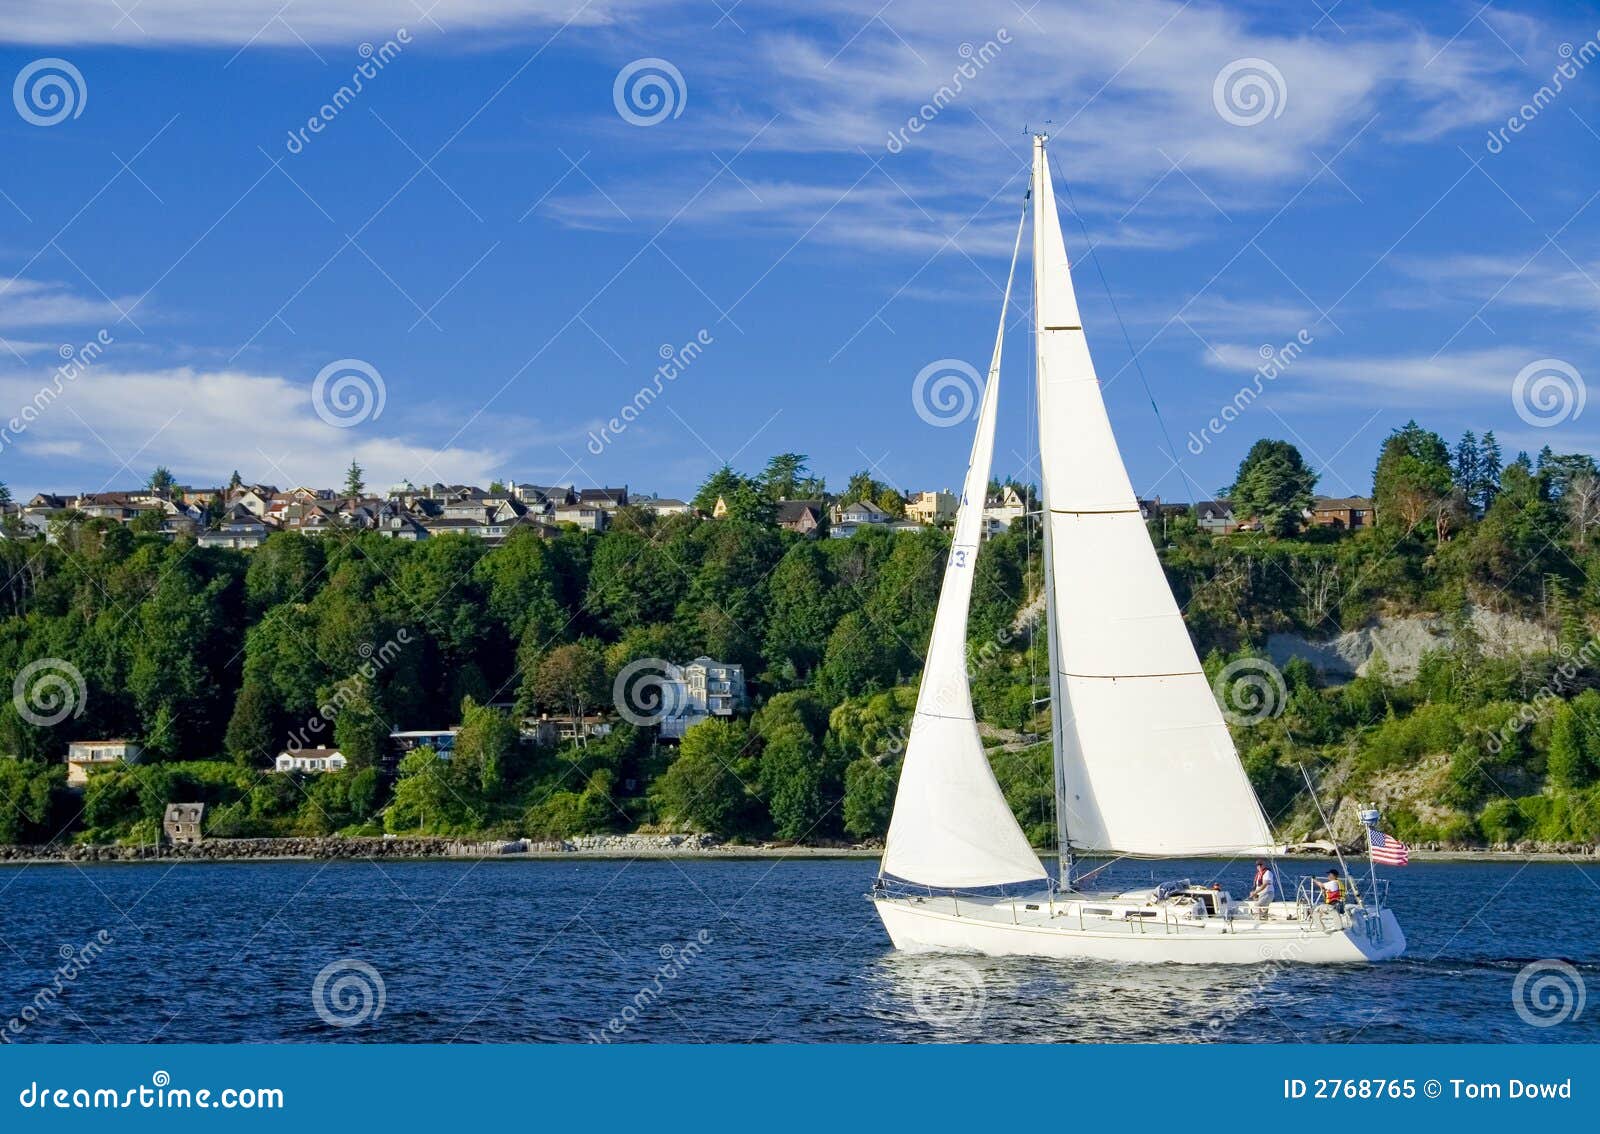 sailing on elliott bay